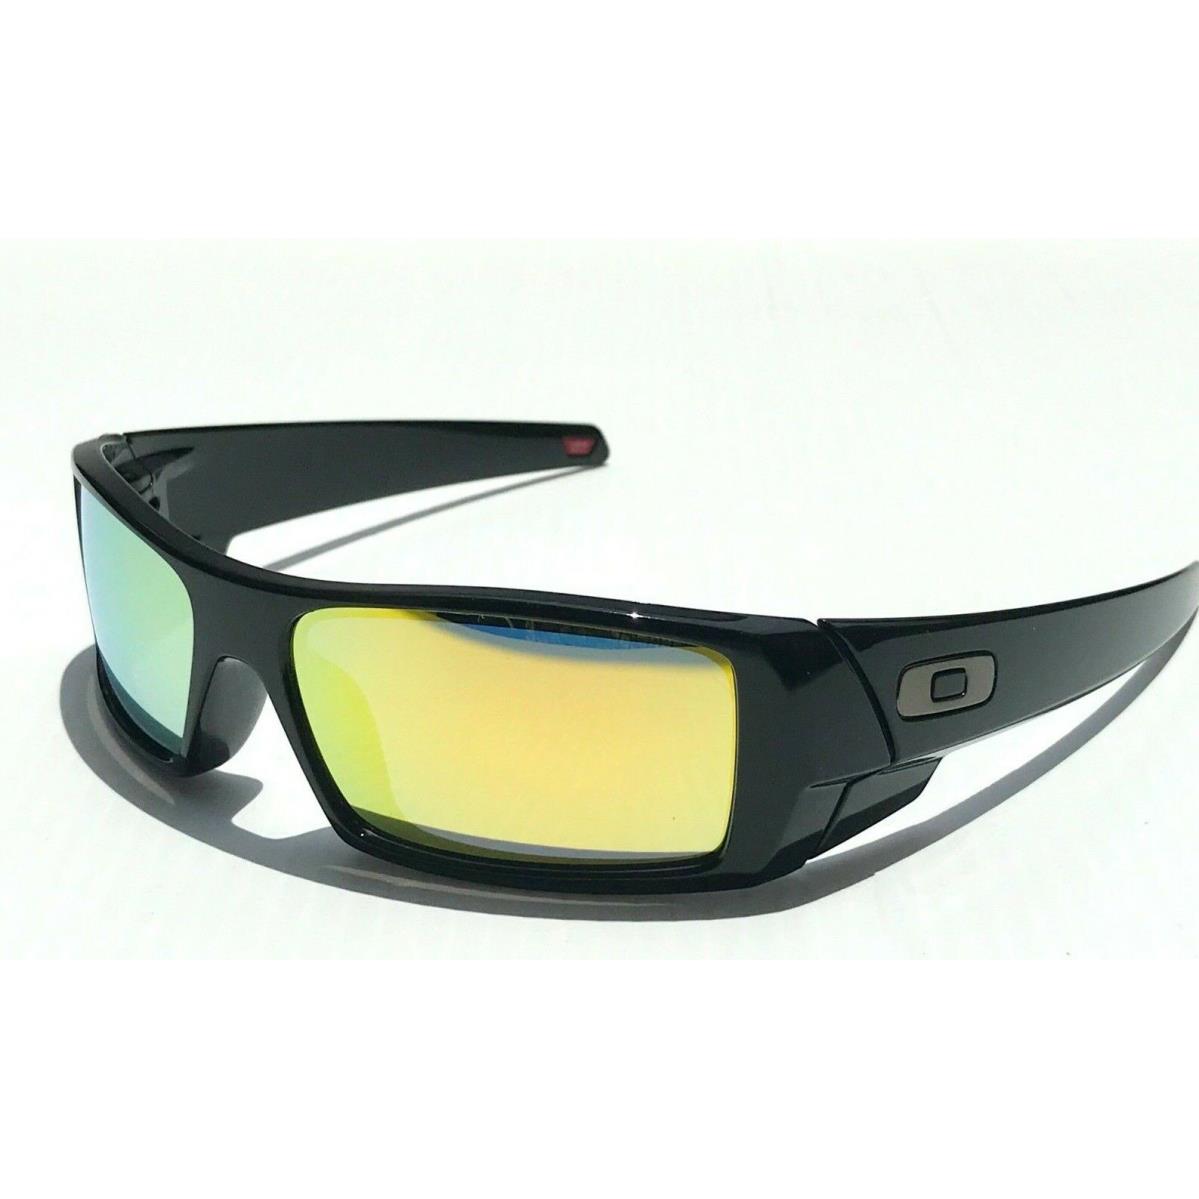 Oakley sunglasses Gascan - Black Frame, Gold Lens 5